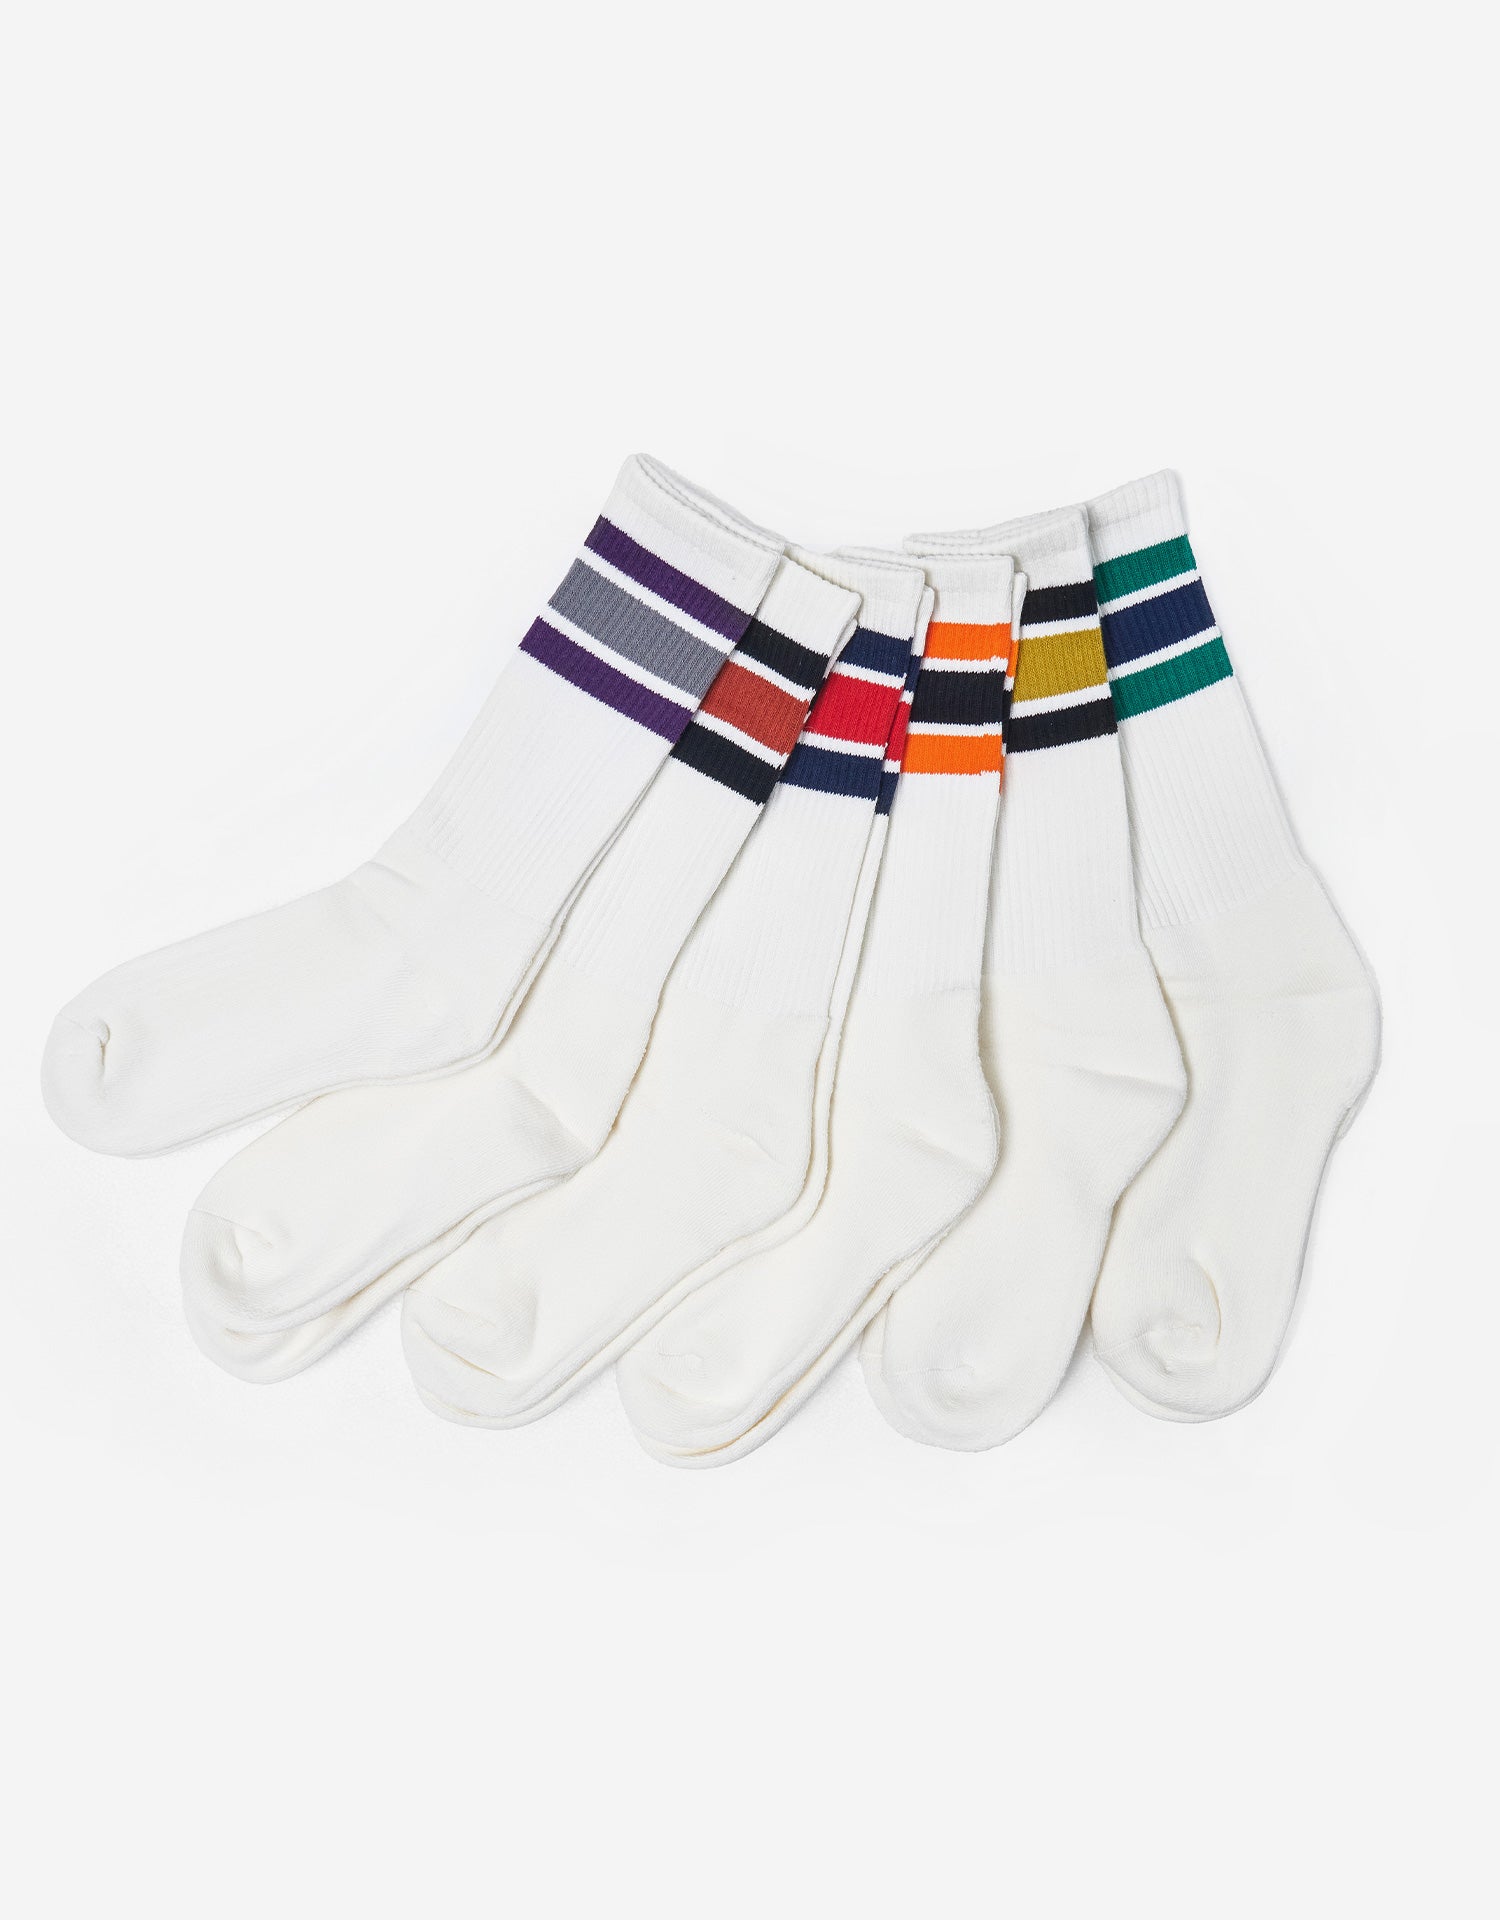 TopBasics Contrast Striped Socks